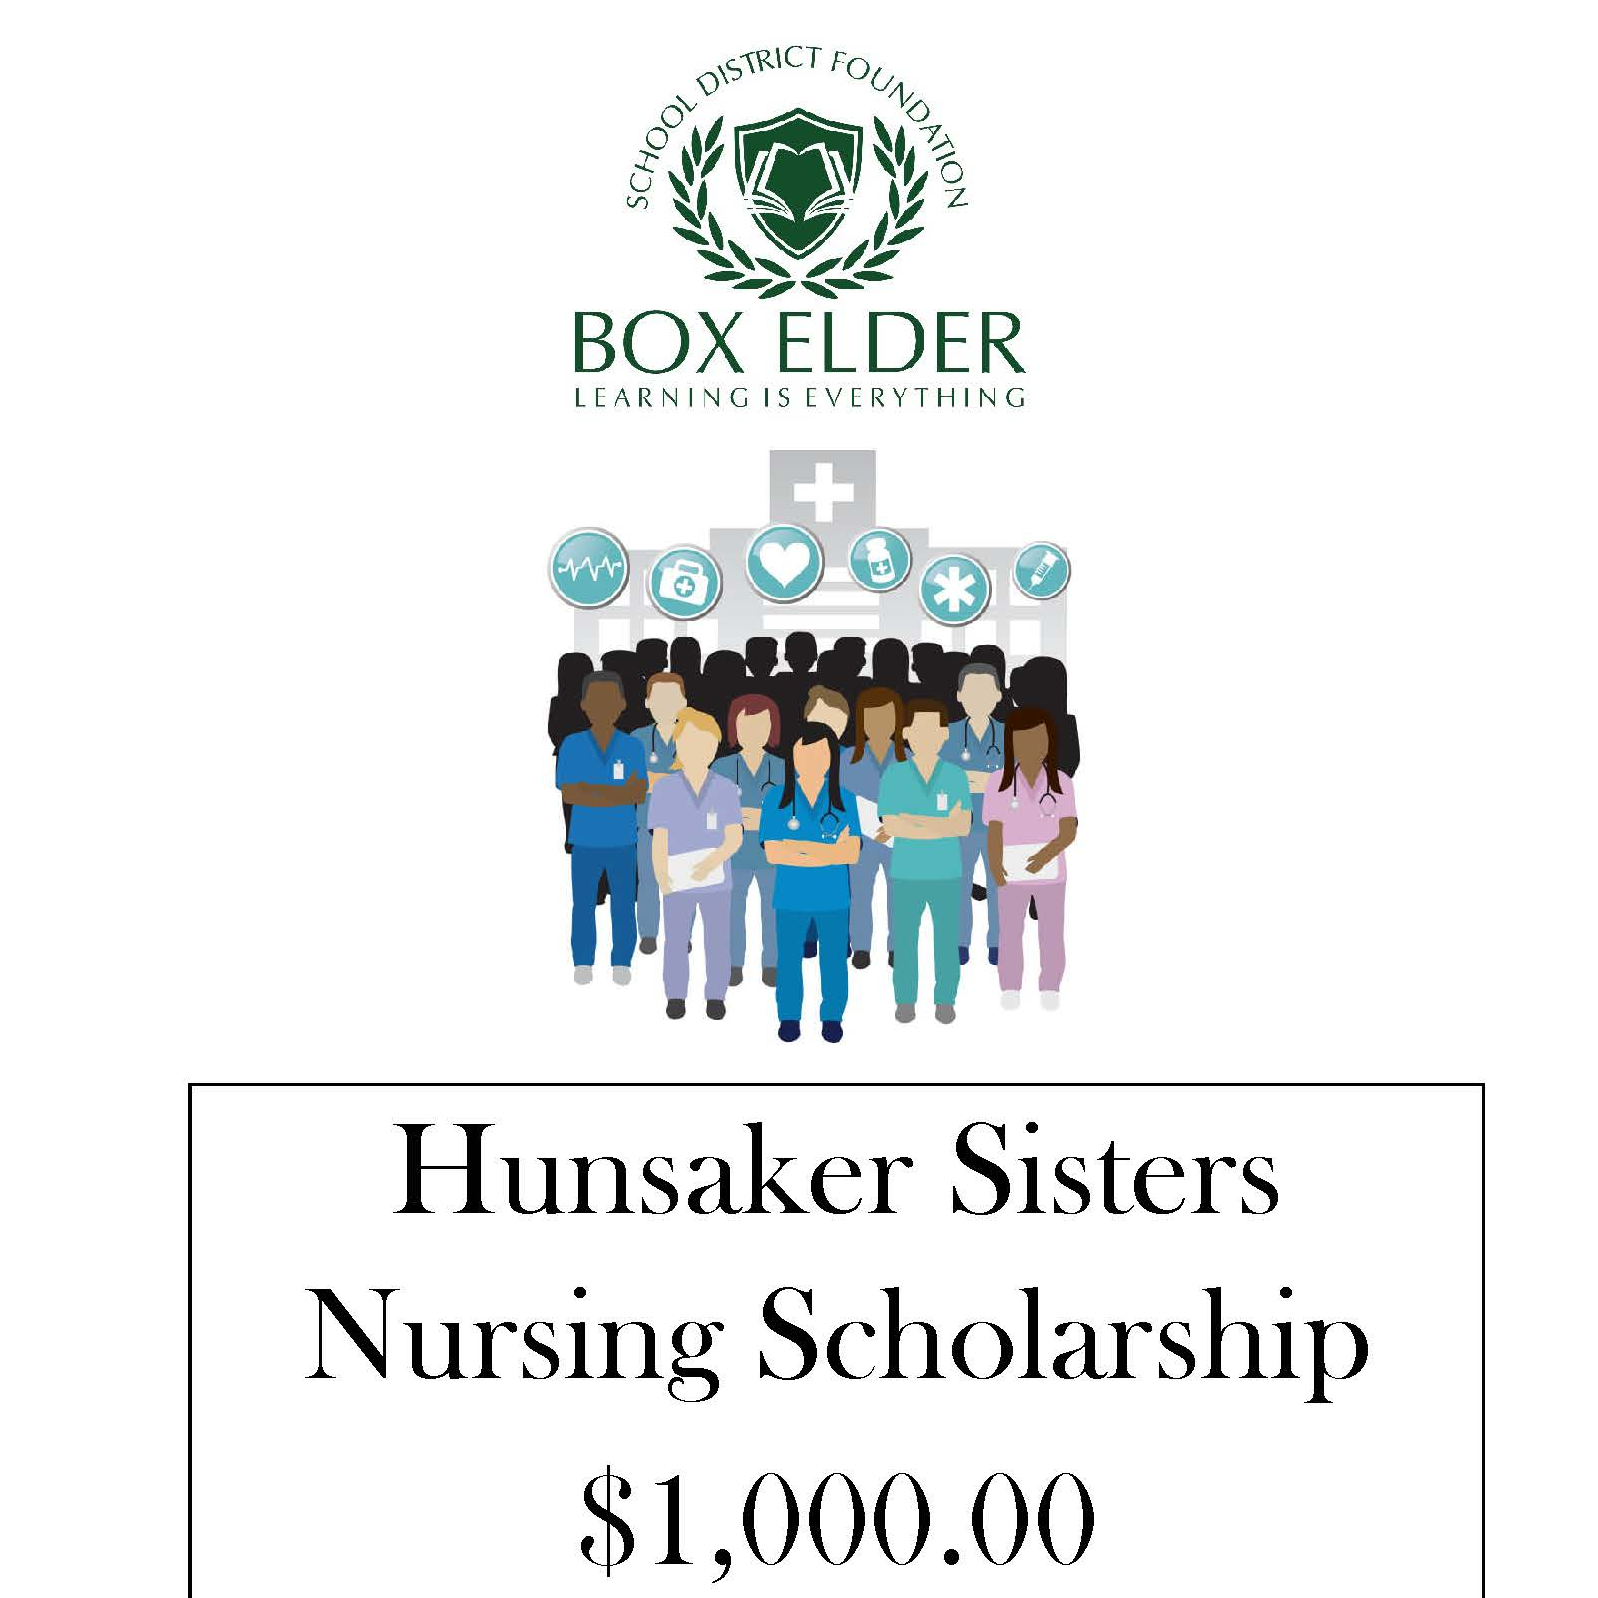 Hunsaker Sisters Nursing Scholarship